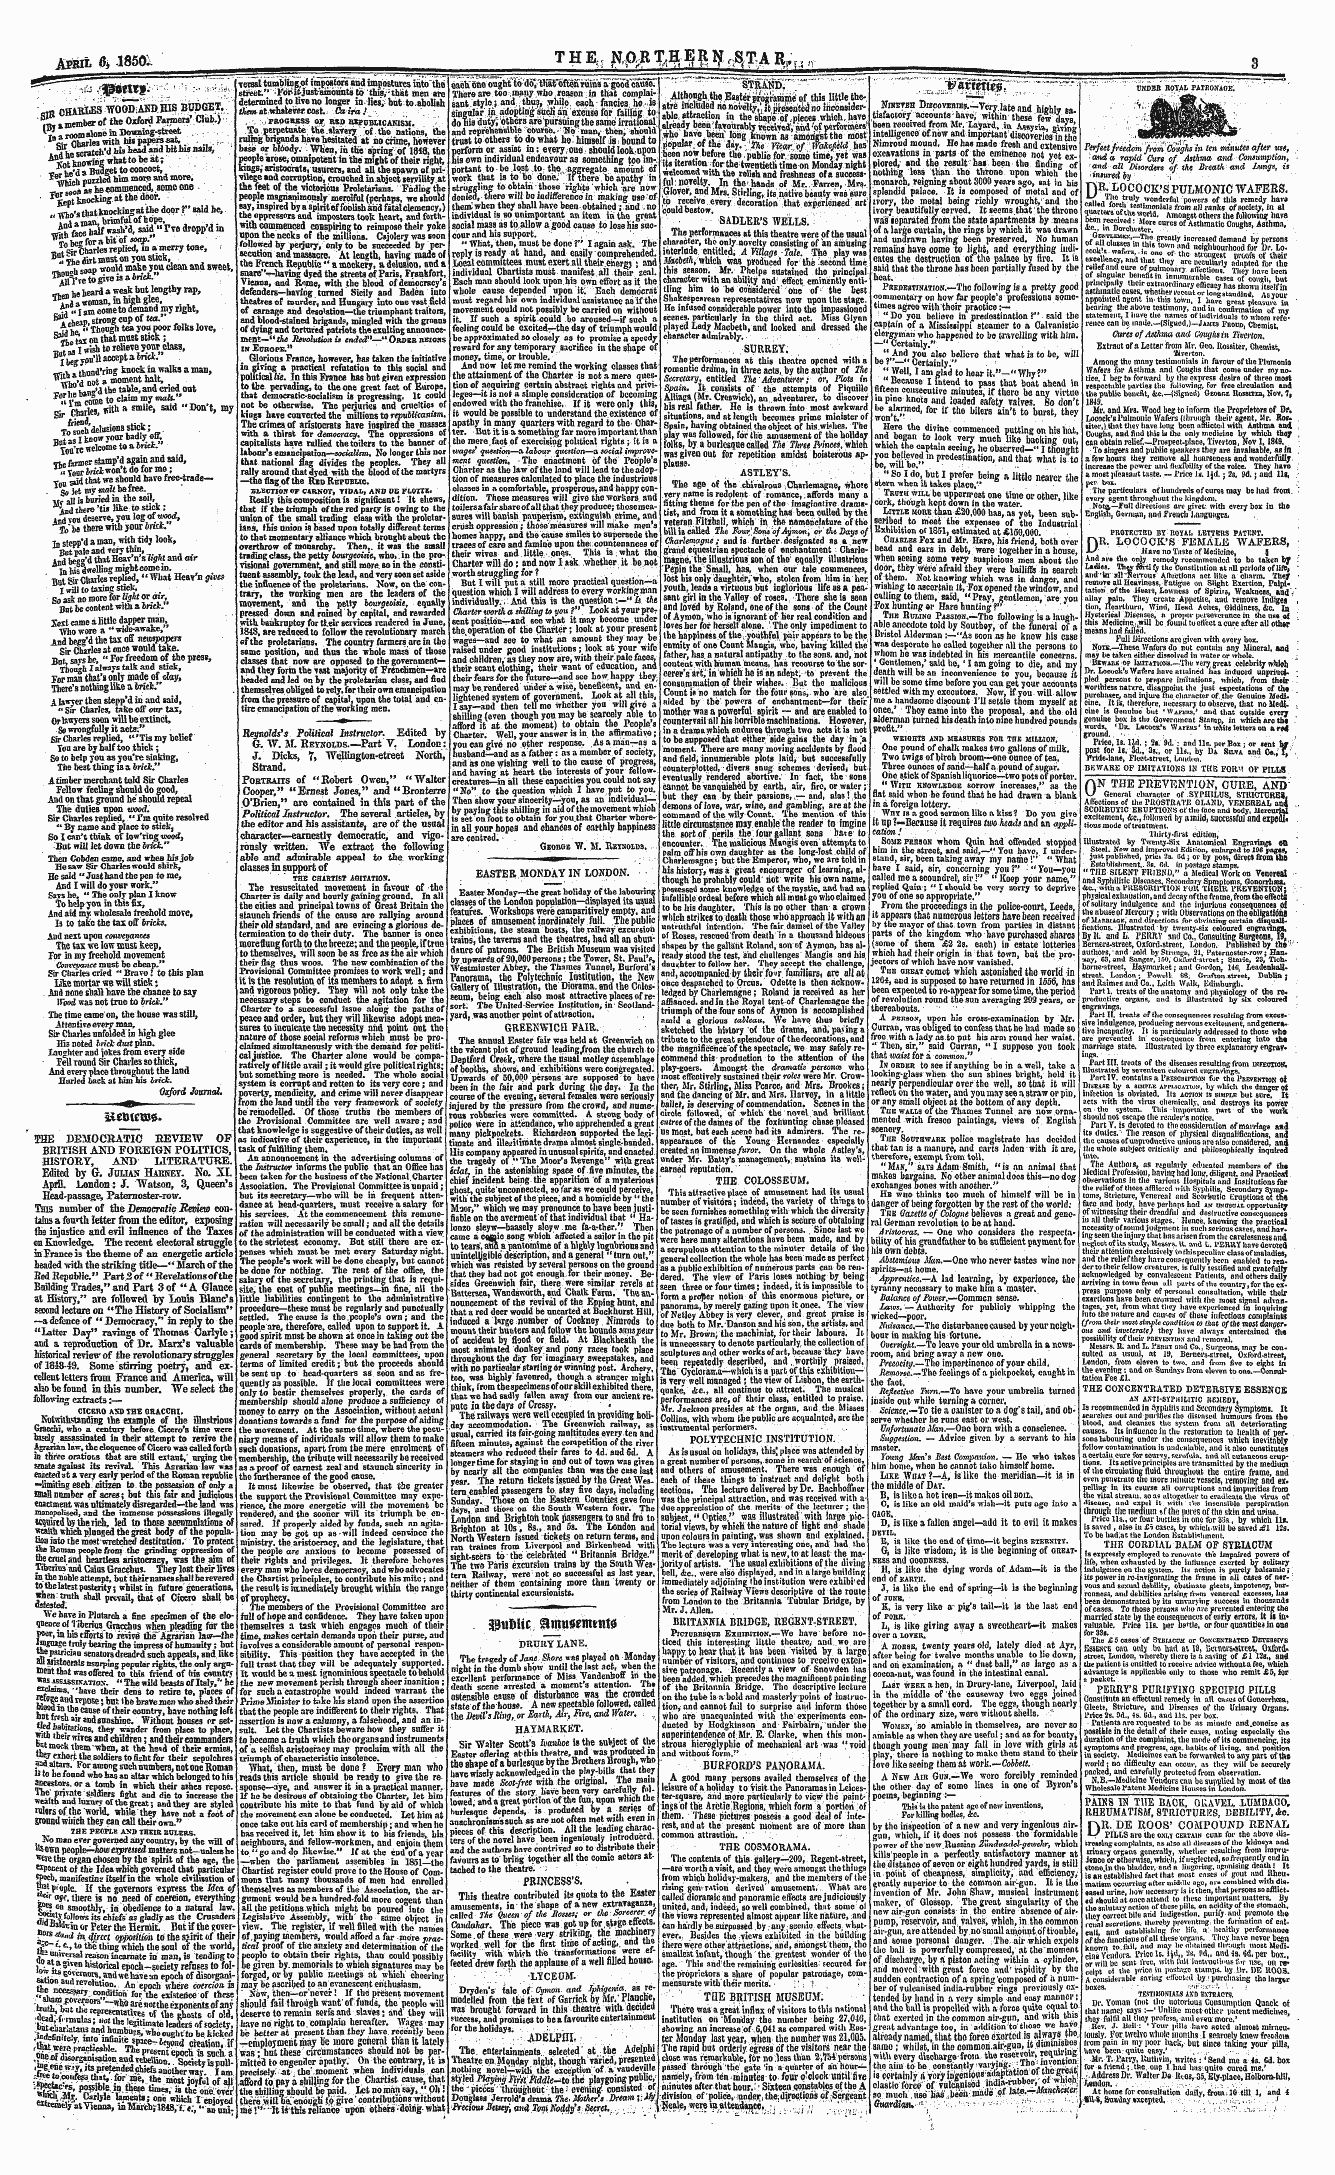 Northern Star (1837-1852): jS F Y, 2nd edition - Cm Charles Woodlakd His Budget, Mr » Mem...